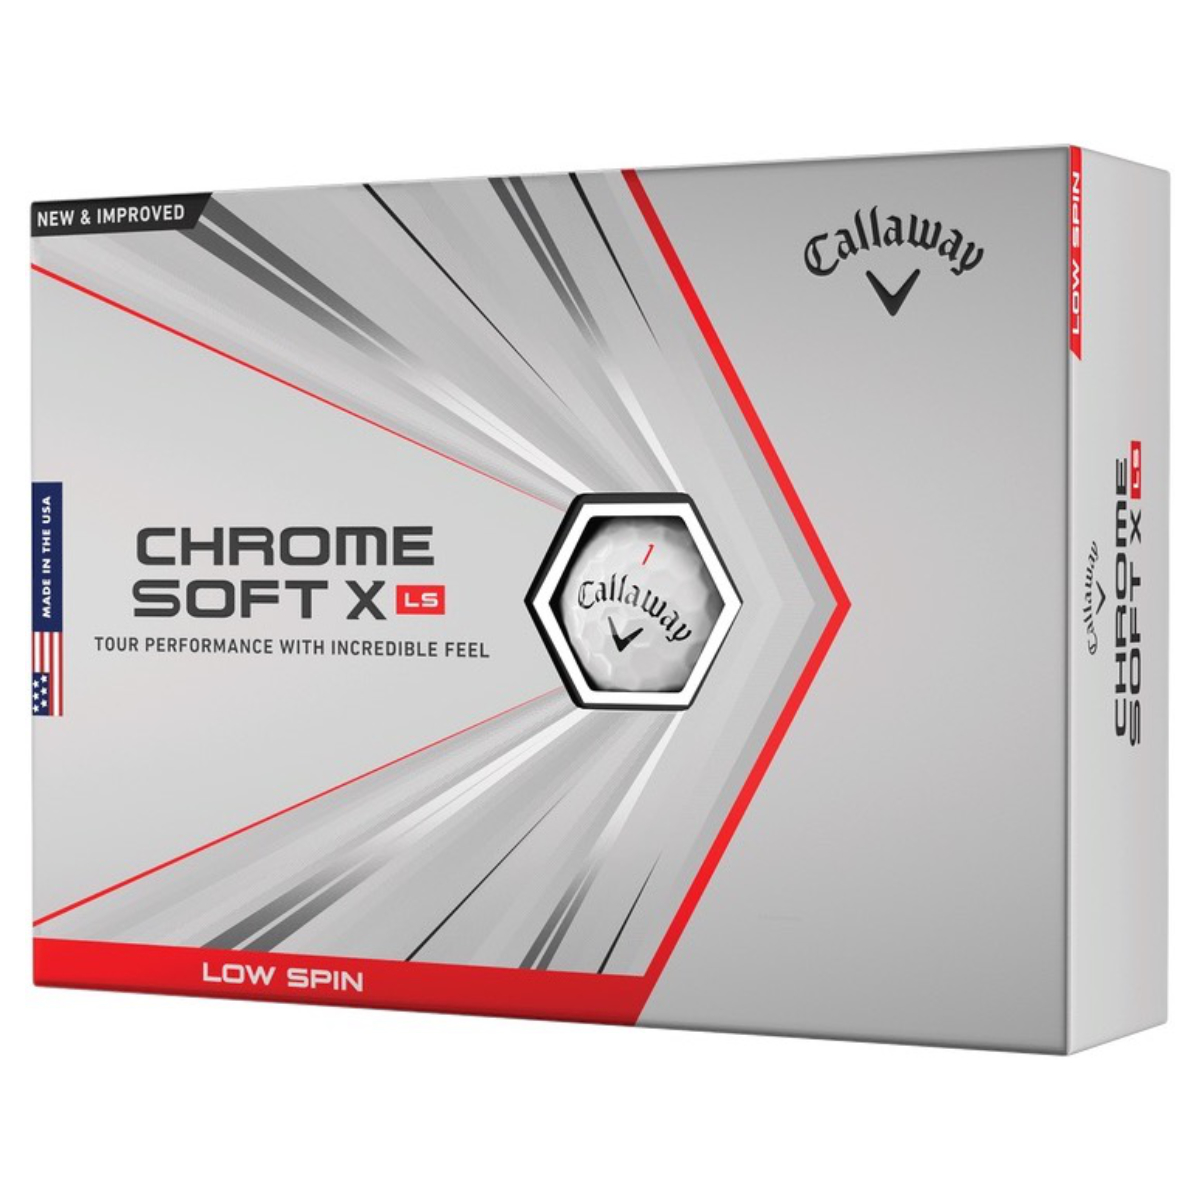 Callaway Chromesoft X LS White